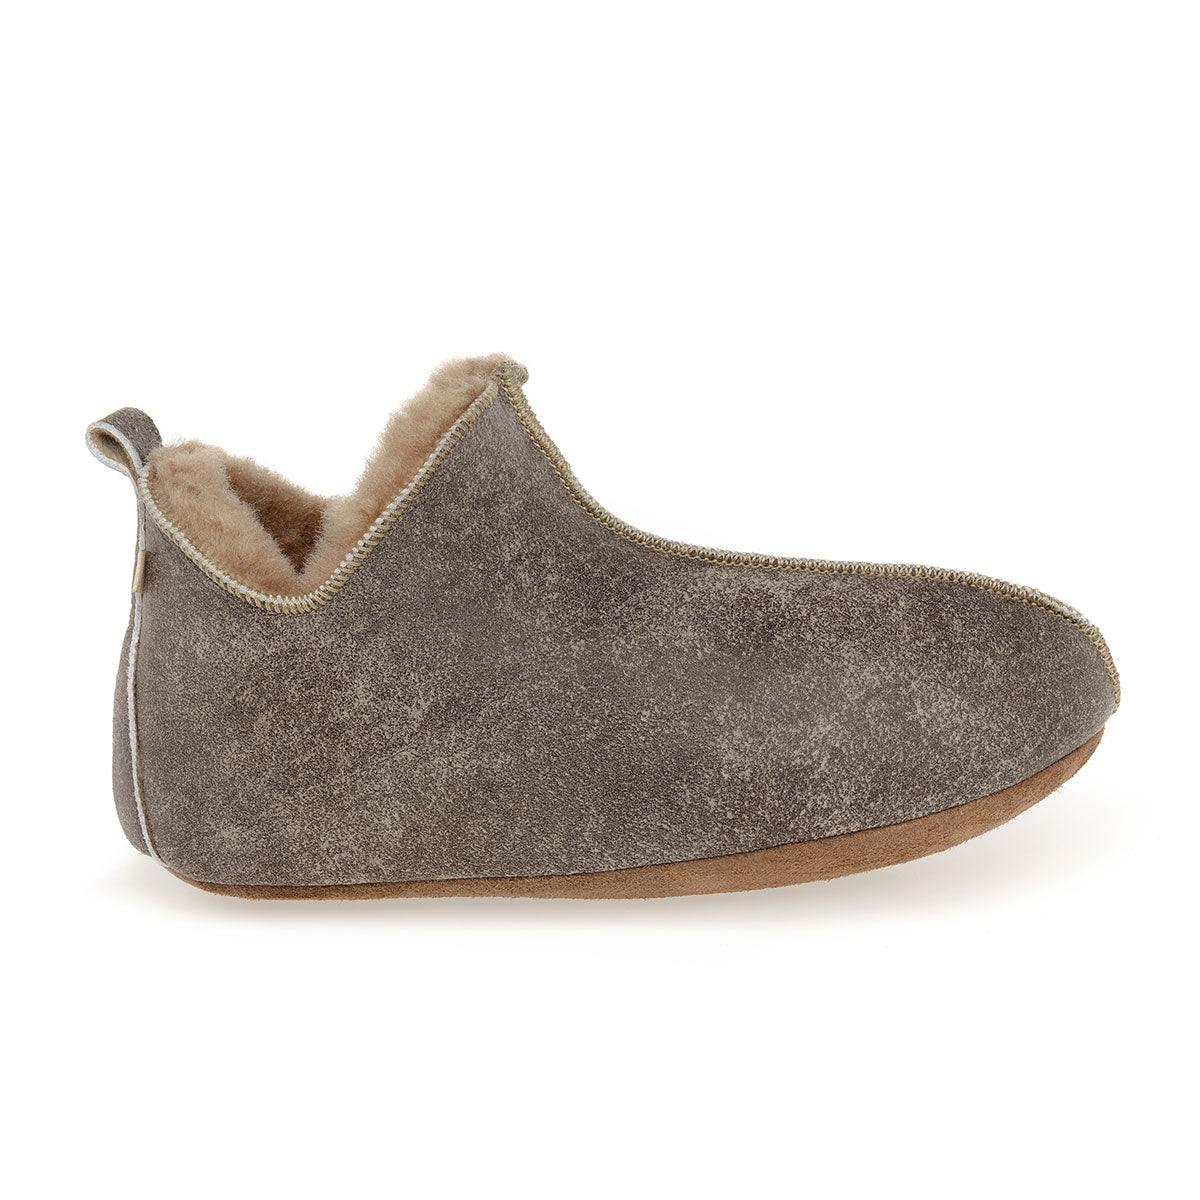 Berit Sheepskin Slippers - Nutmeg Distressed Leather